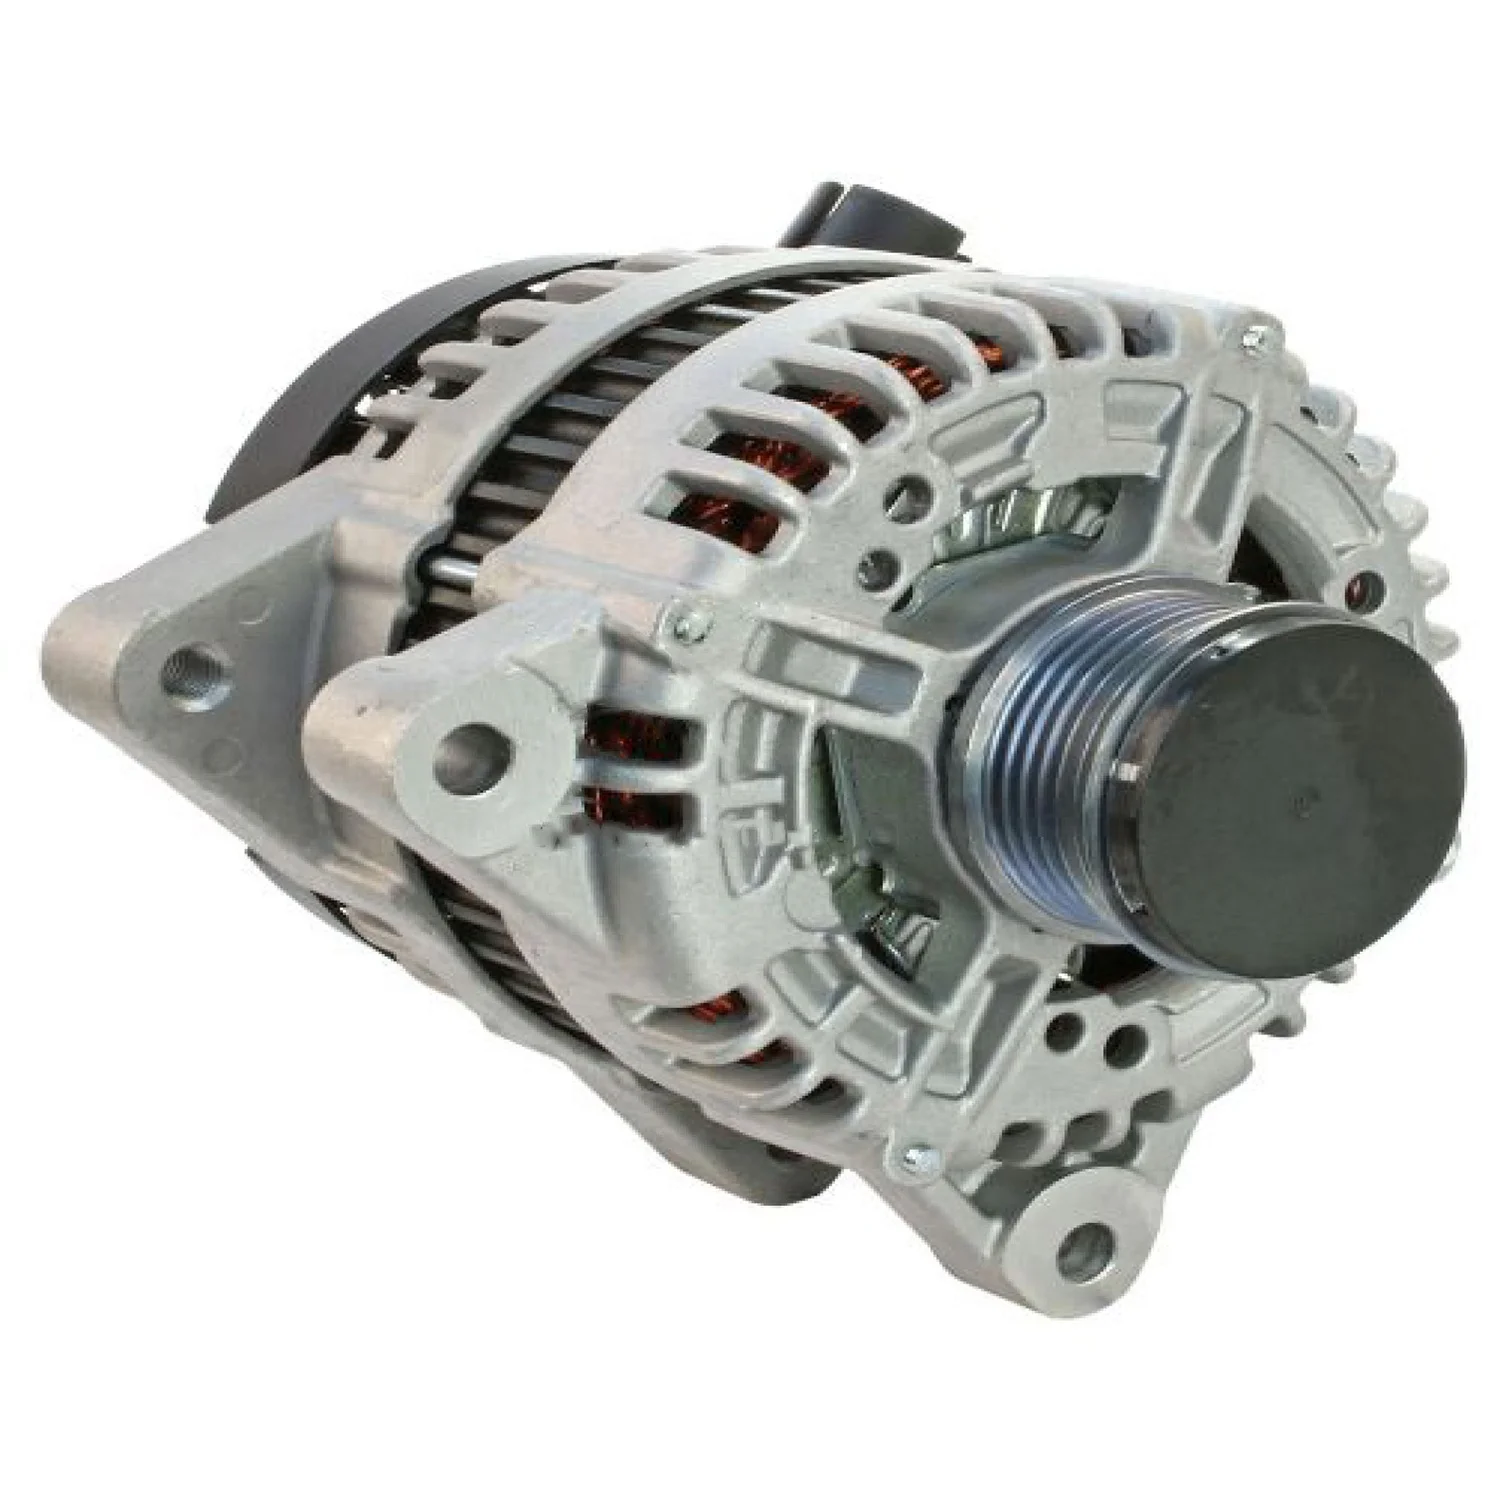 

Auto Dynamo Alternator Generator For BSH Delco Ford VLEO VOLV A0284 0121615009 0986047960 114724 116441 930873 DRA0213N DRA0873